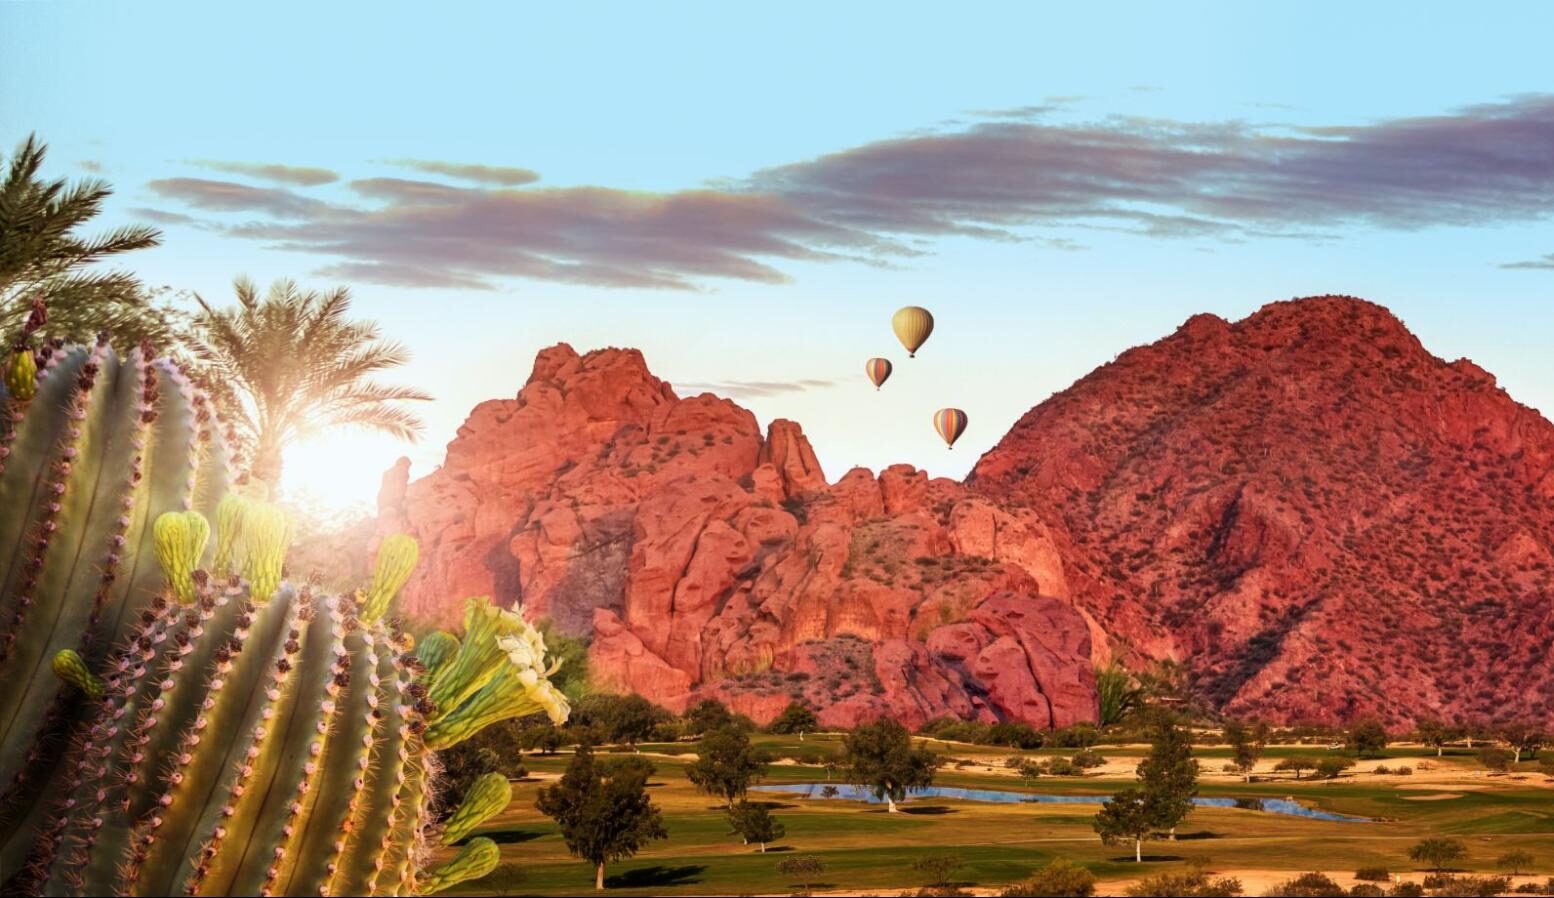 View of hot air balloons in Phoenix, Arizona